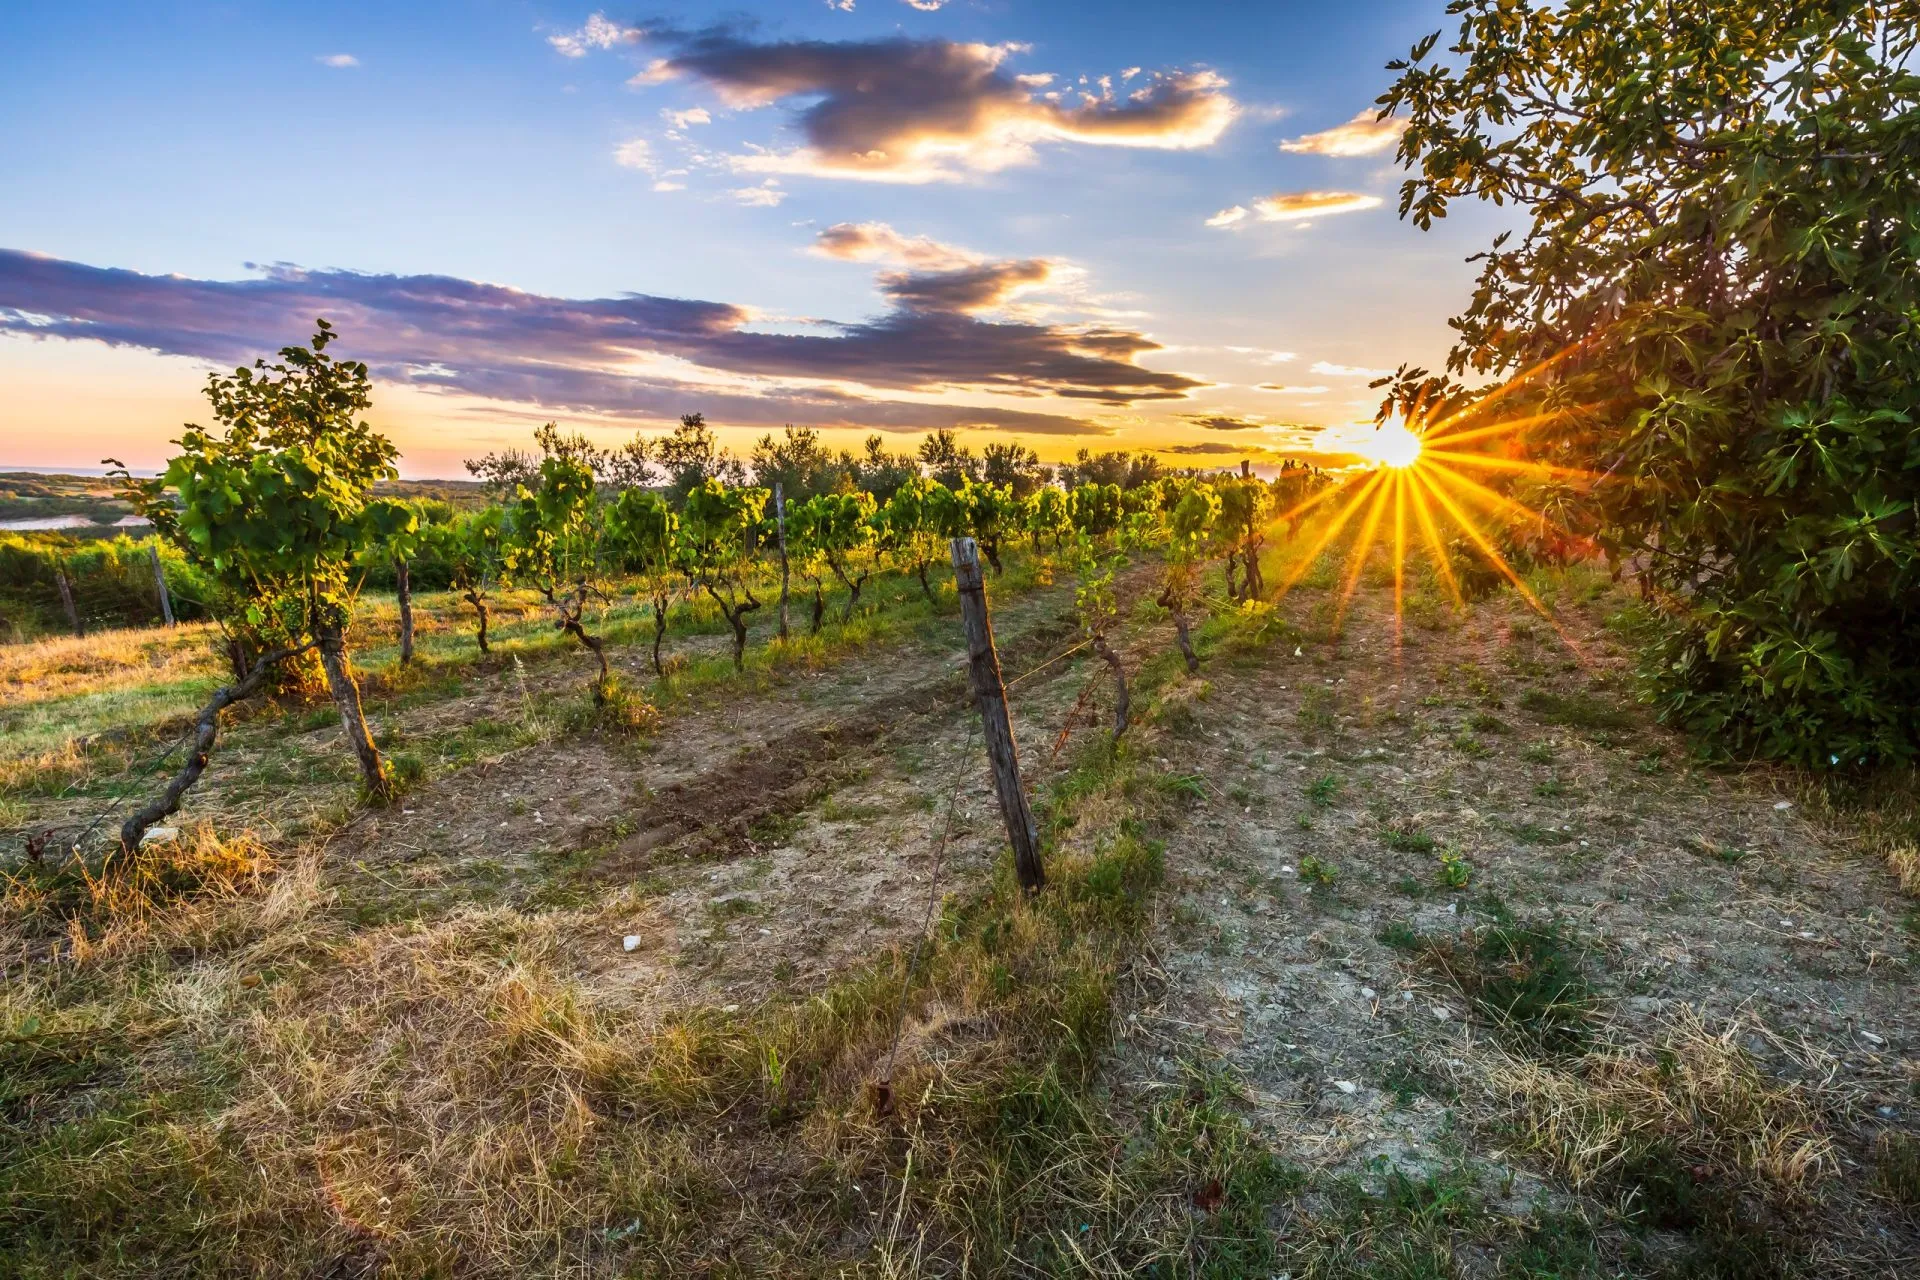 Sunset at a idyllic vineyard at the farmland of Istria, Croatia.